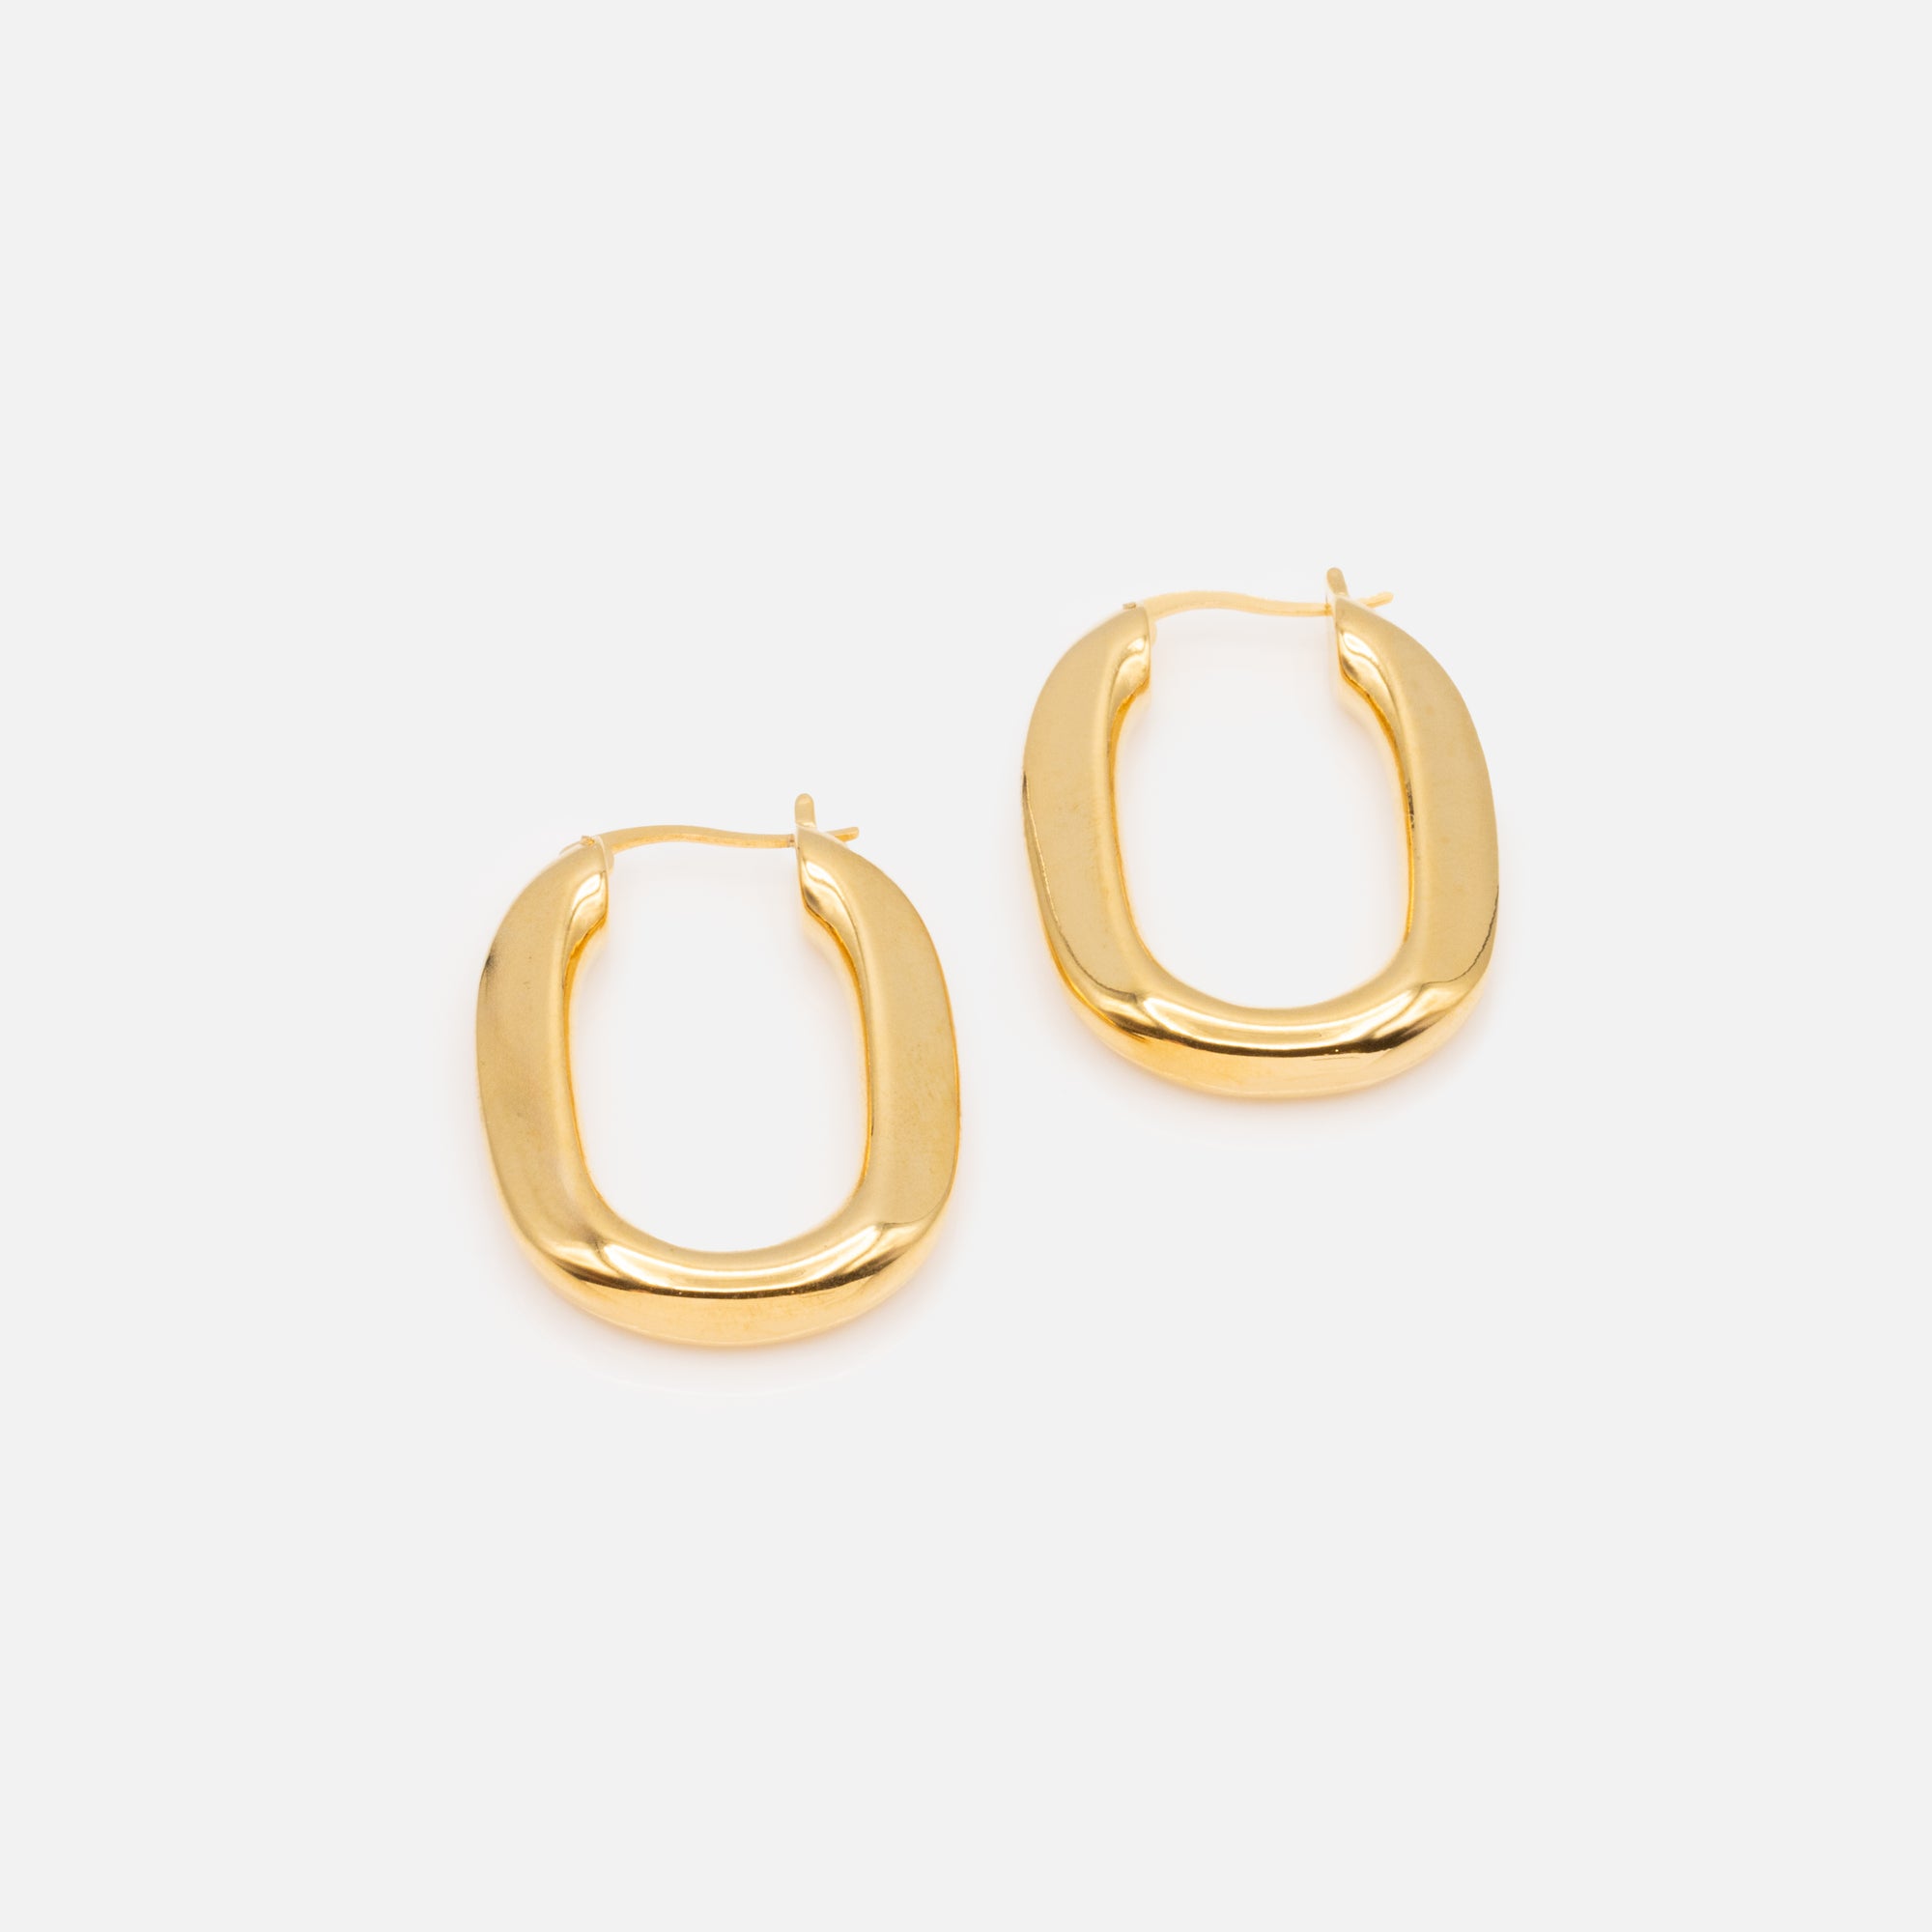 Gold oval stainless steel earrings